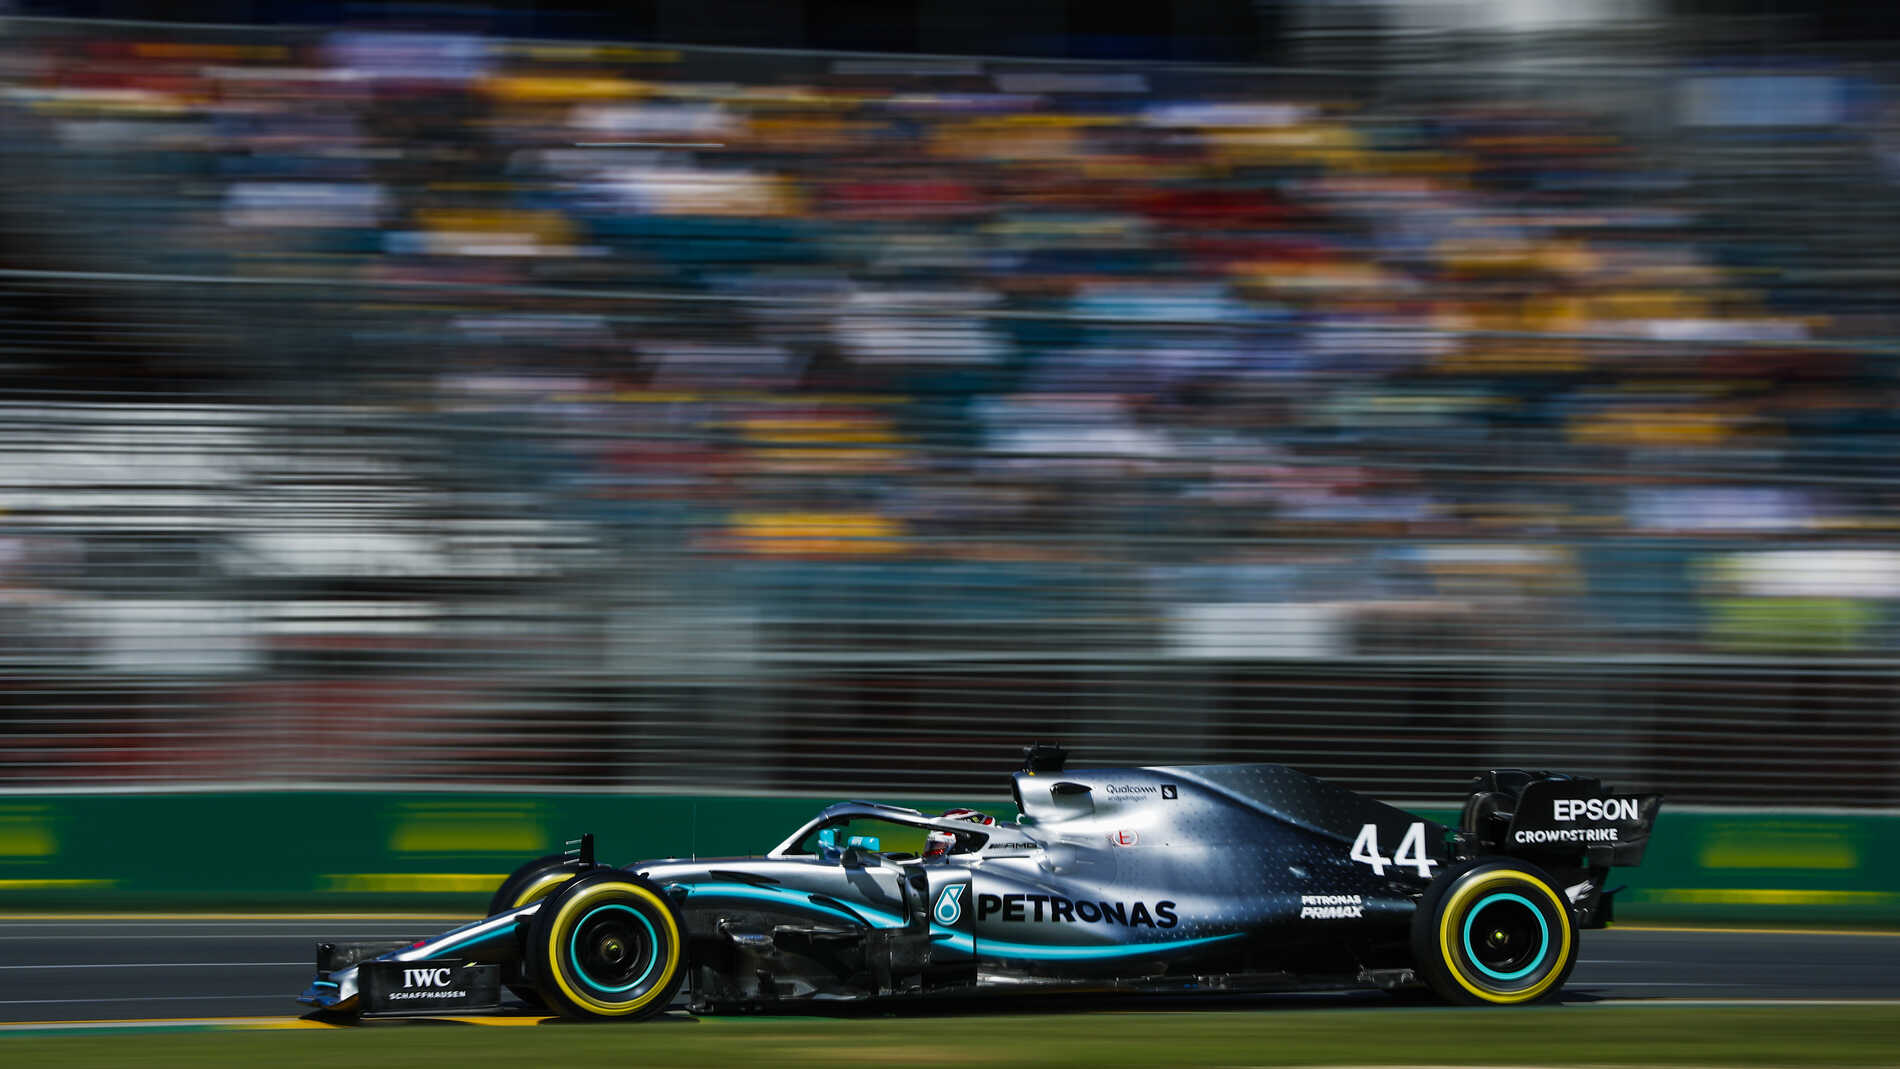 Australian Grand Prix 2019 FP2 report highlights: Hamilton heads Bottas as Mercedes go clear of field | Formula 1®